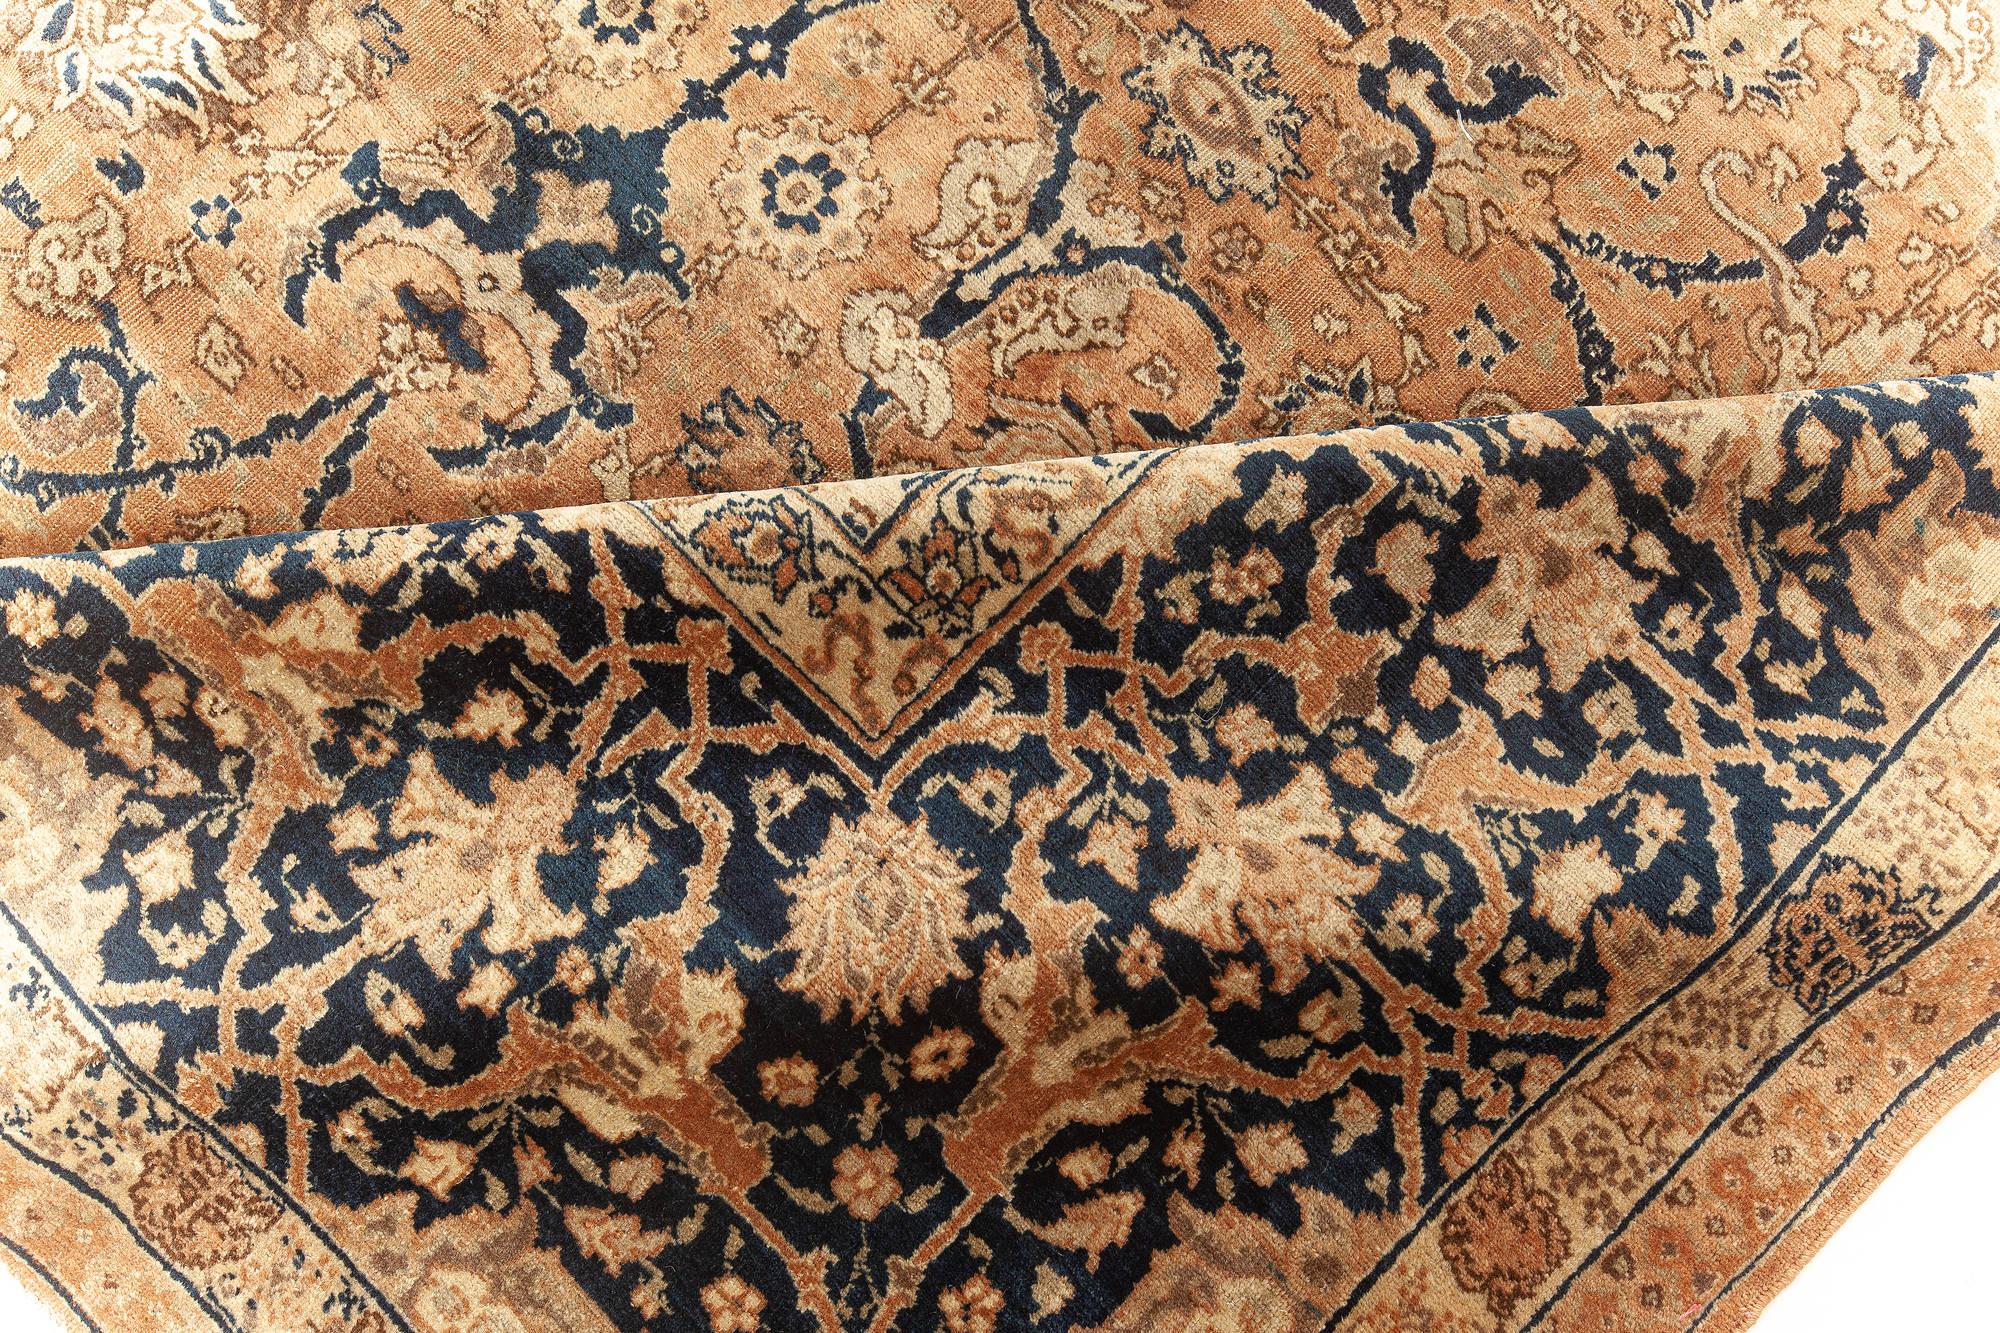 Antique Persian Tabriz Handmade Wool Carpet
Size: 13'4